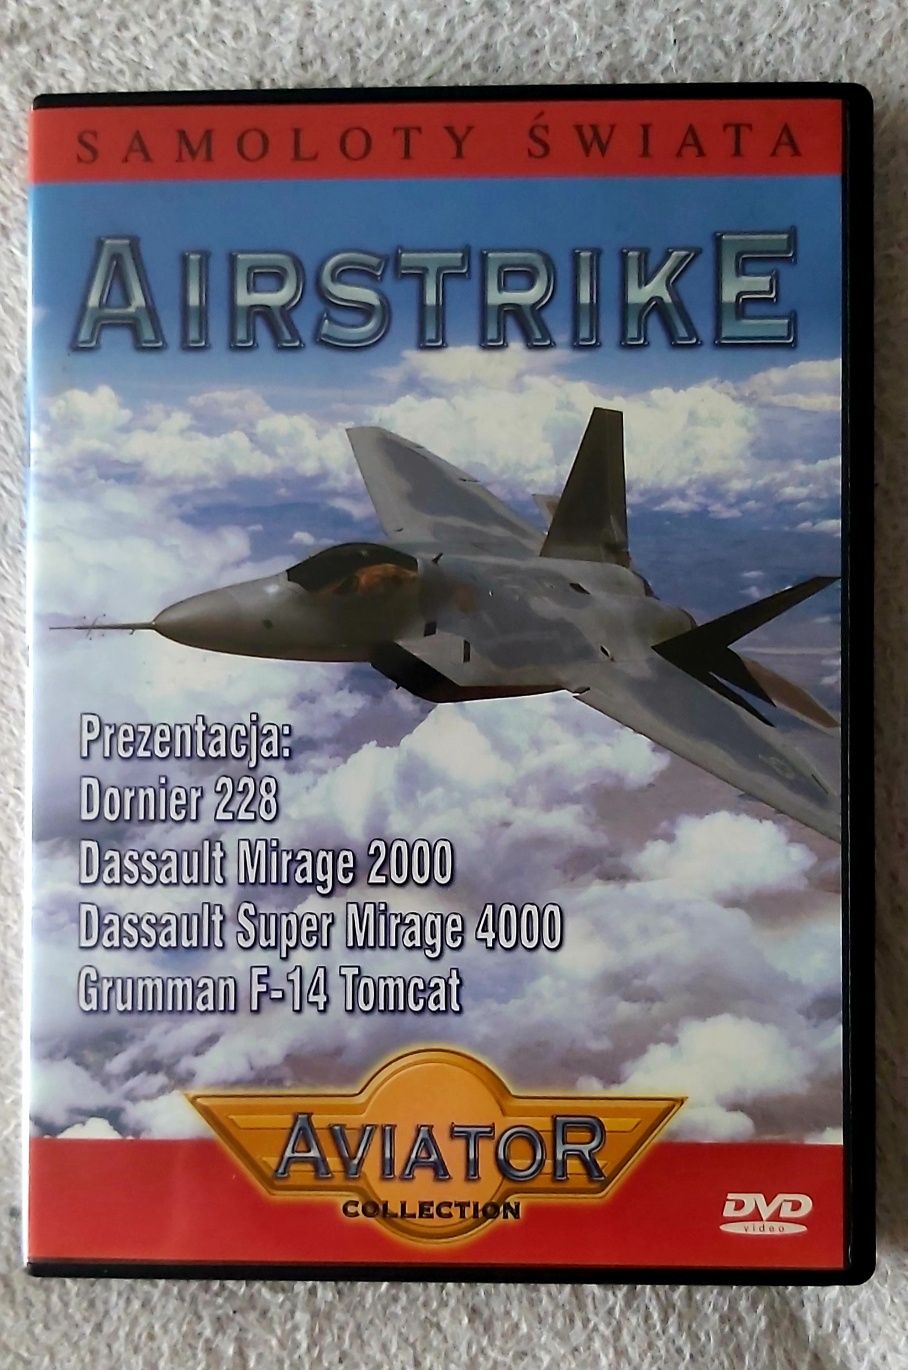 Samoloty świata "Airstrike" na płycie DVD.